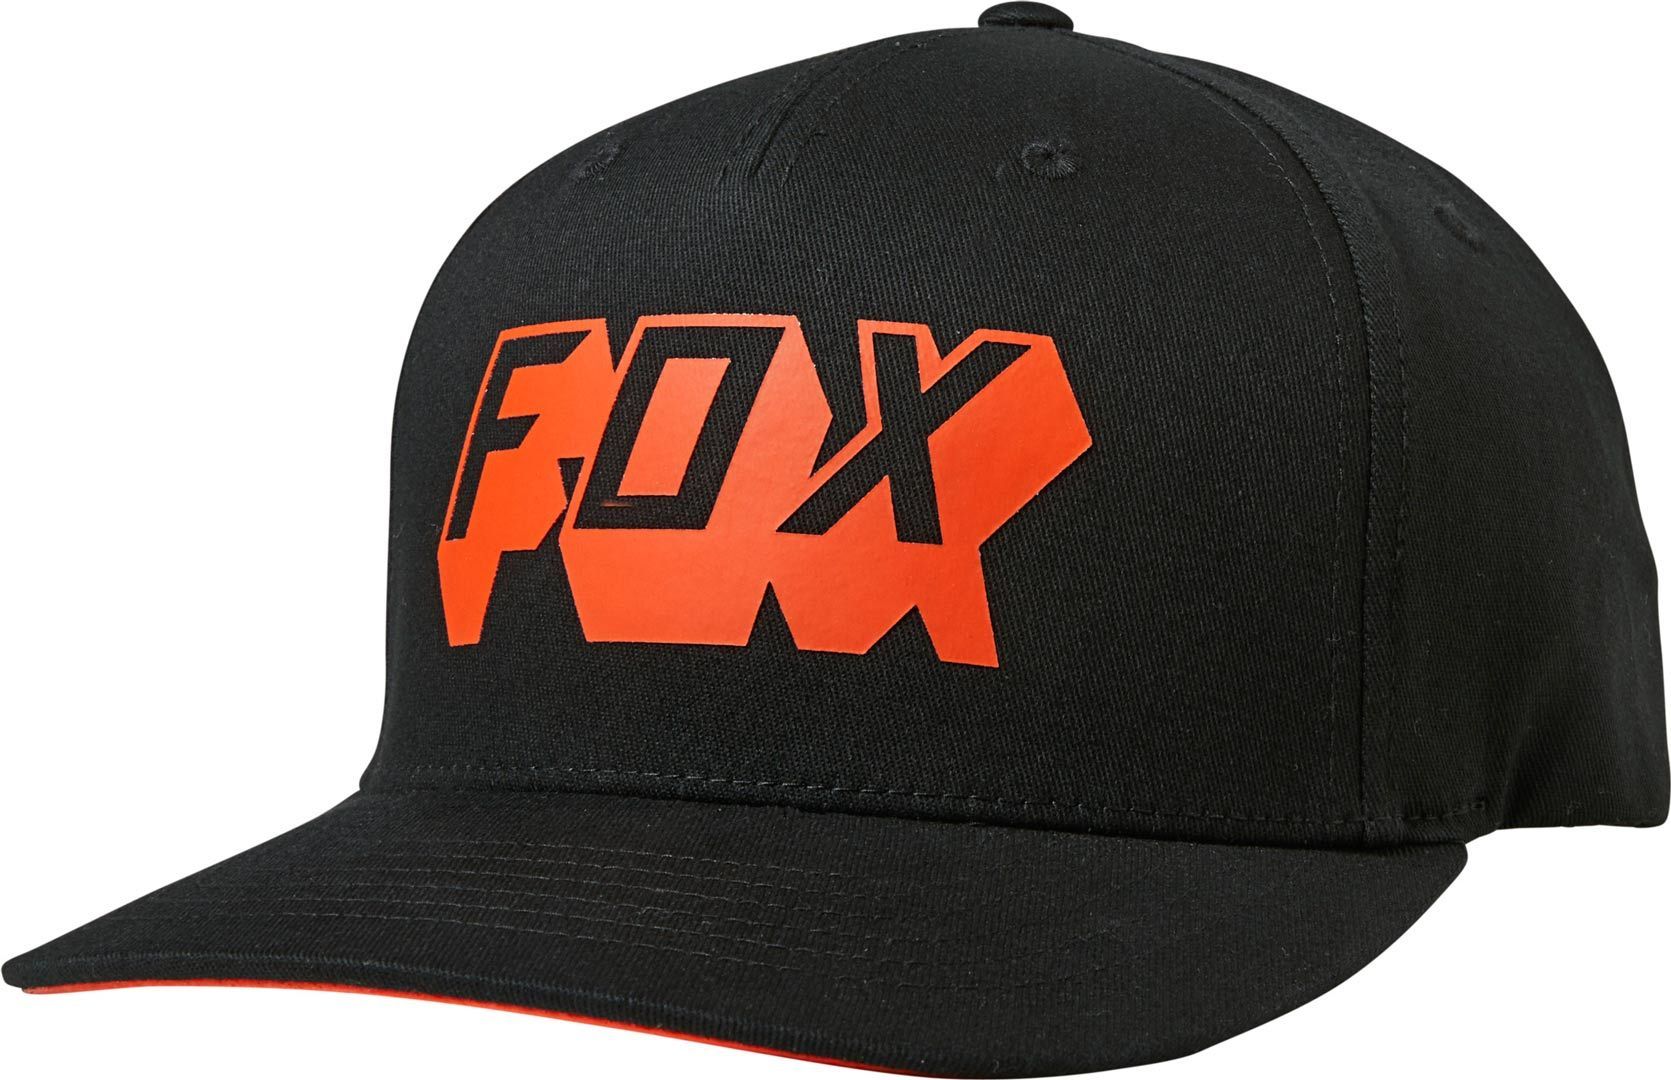 Кепка FOX BNKZ Flexfit, черный кепка vibe черный единый размер